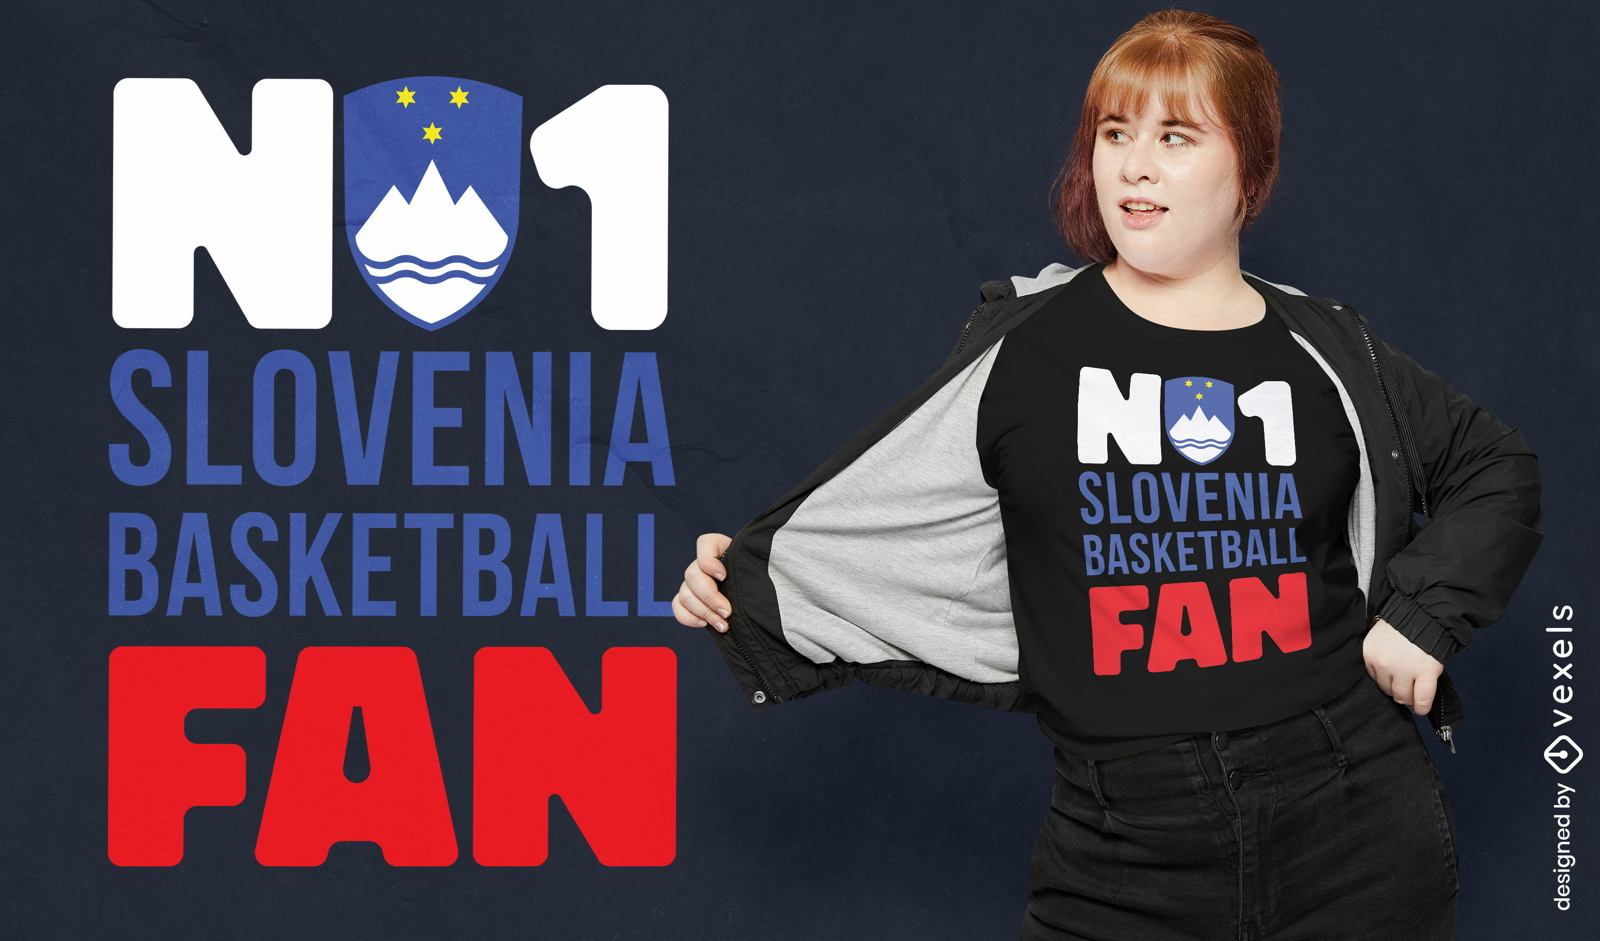 Dise?o de camiseta de deporte de baloncesto de eslovenia.